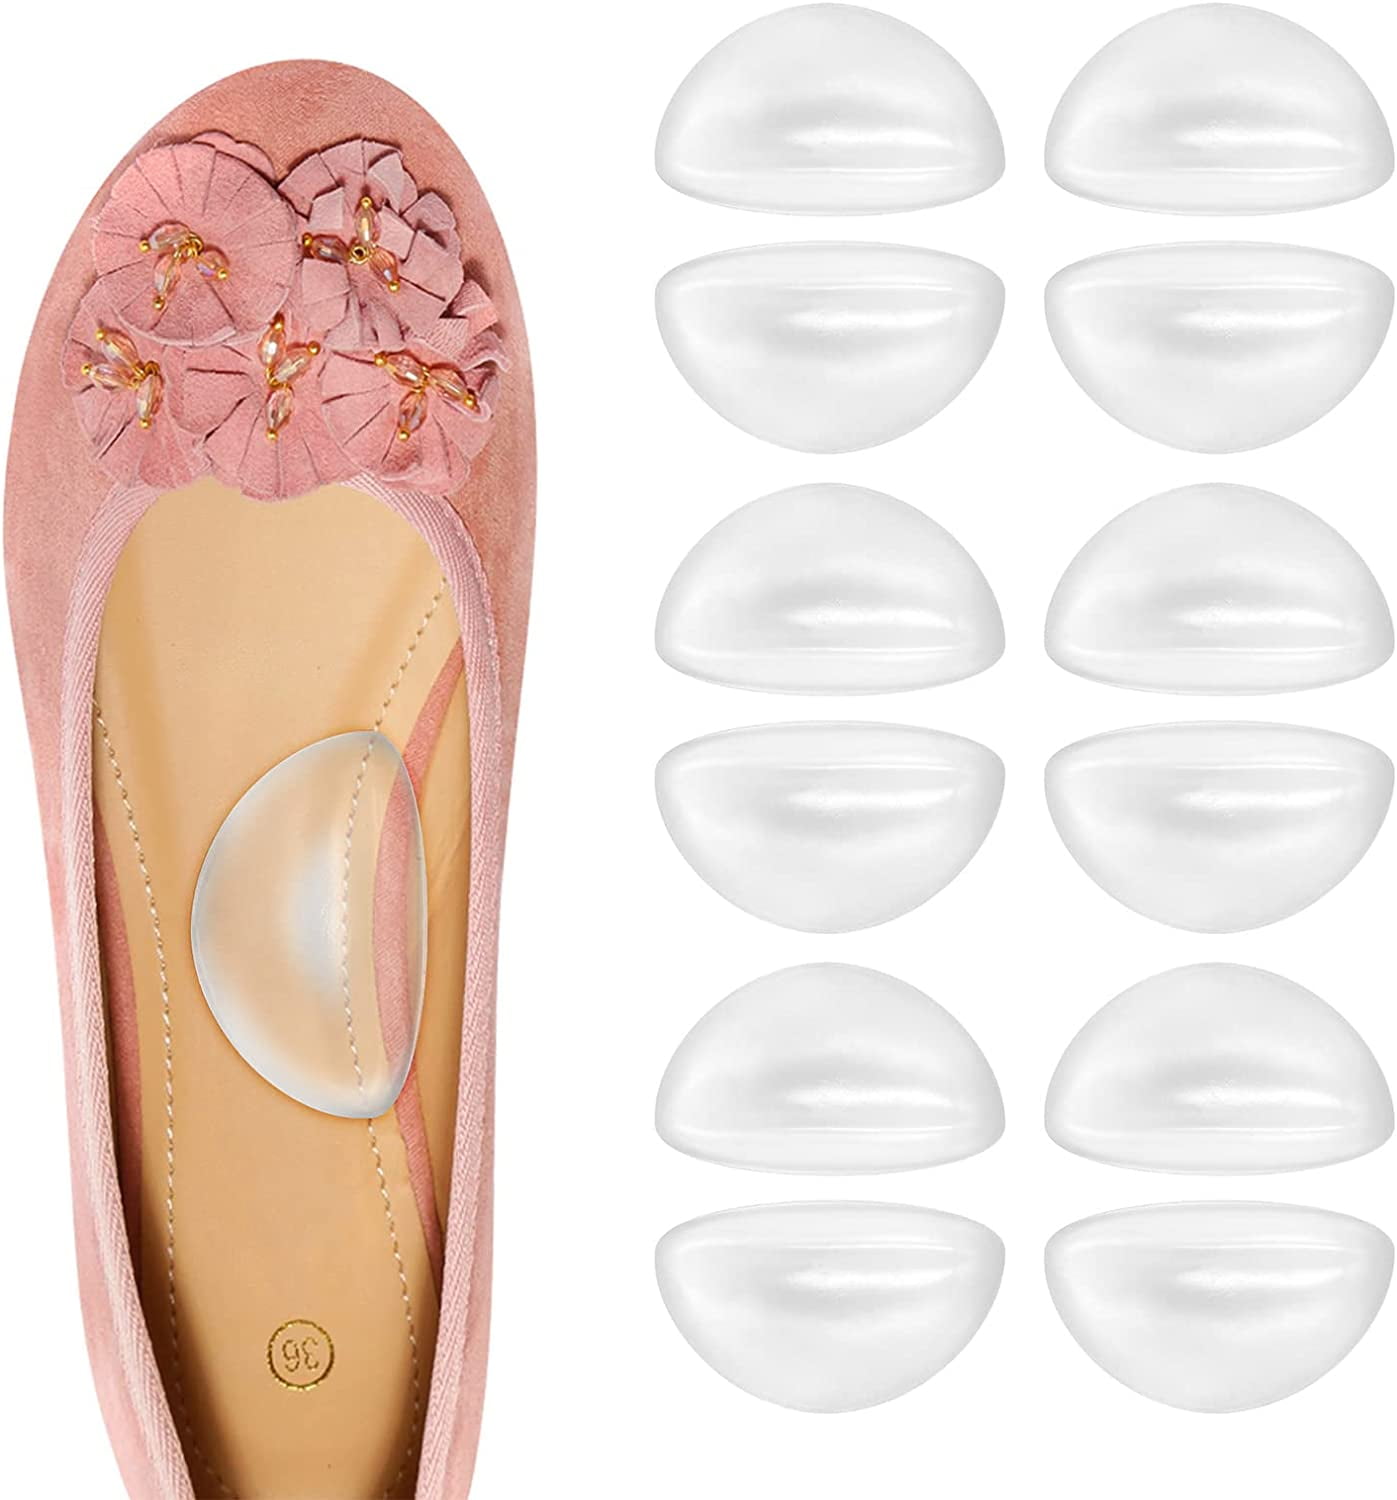 Foot Care Flip-Flop Sandal Cushion Shoe Insoles Gel Shoes Inserts Inserts Pads 